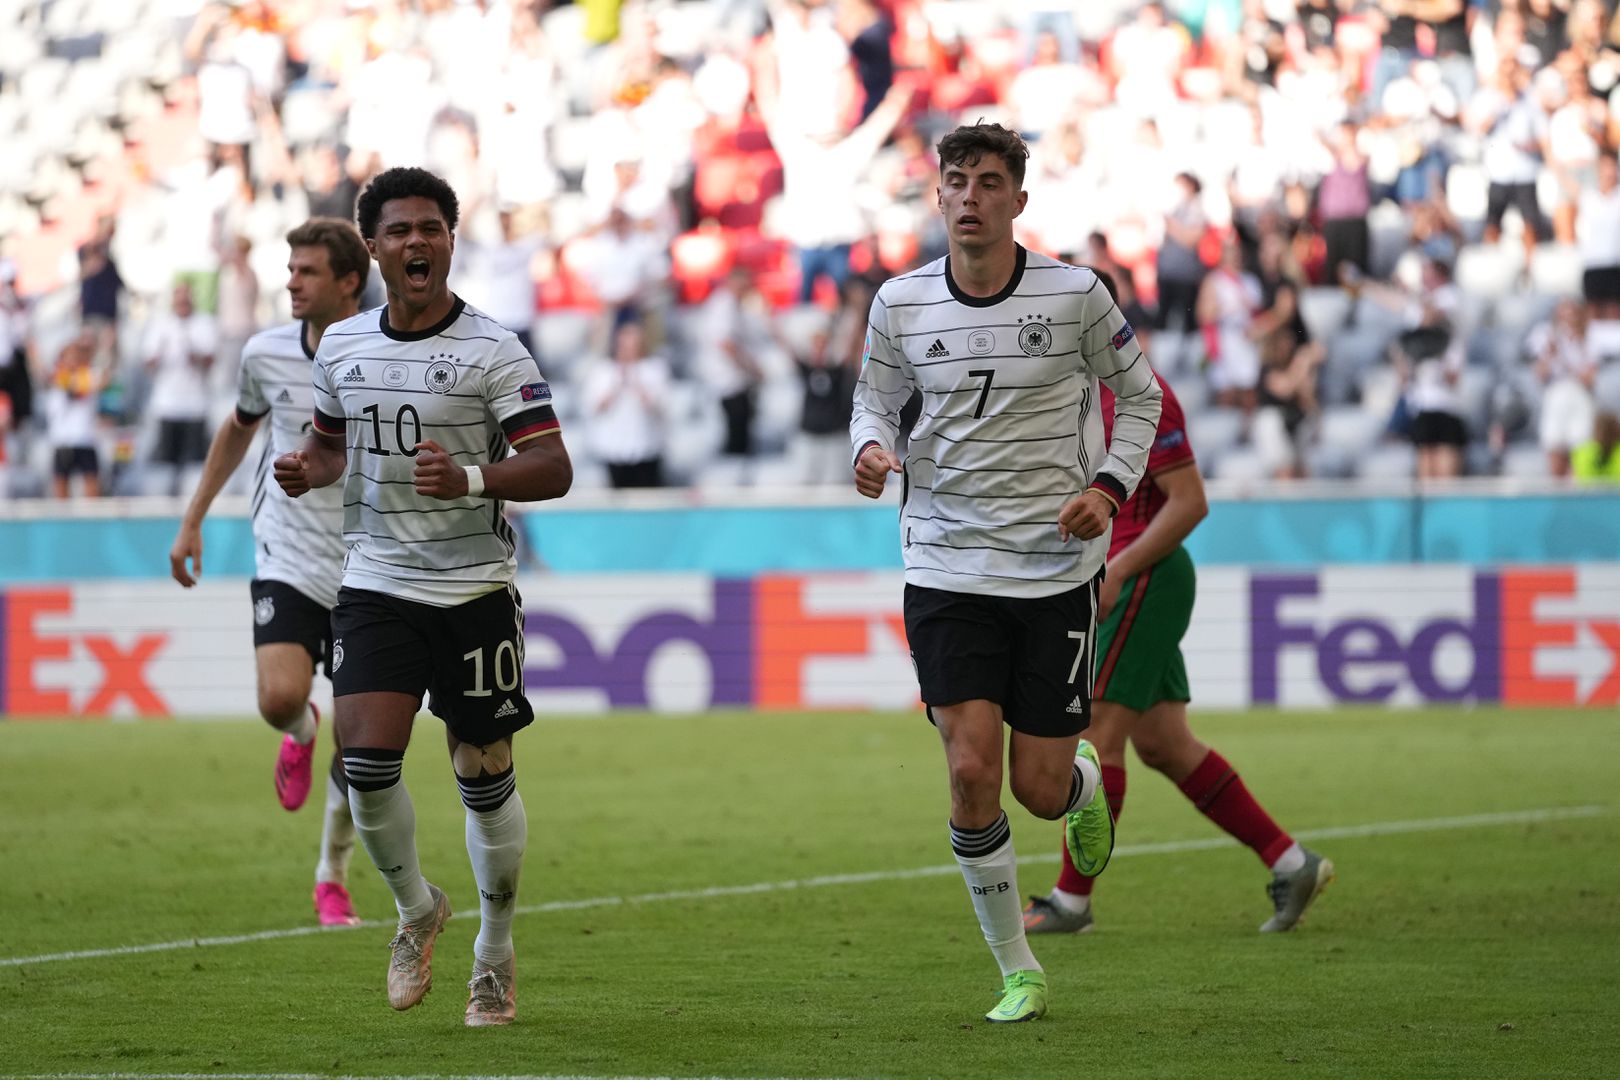 Португалия - Германия 2:4